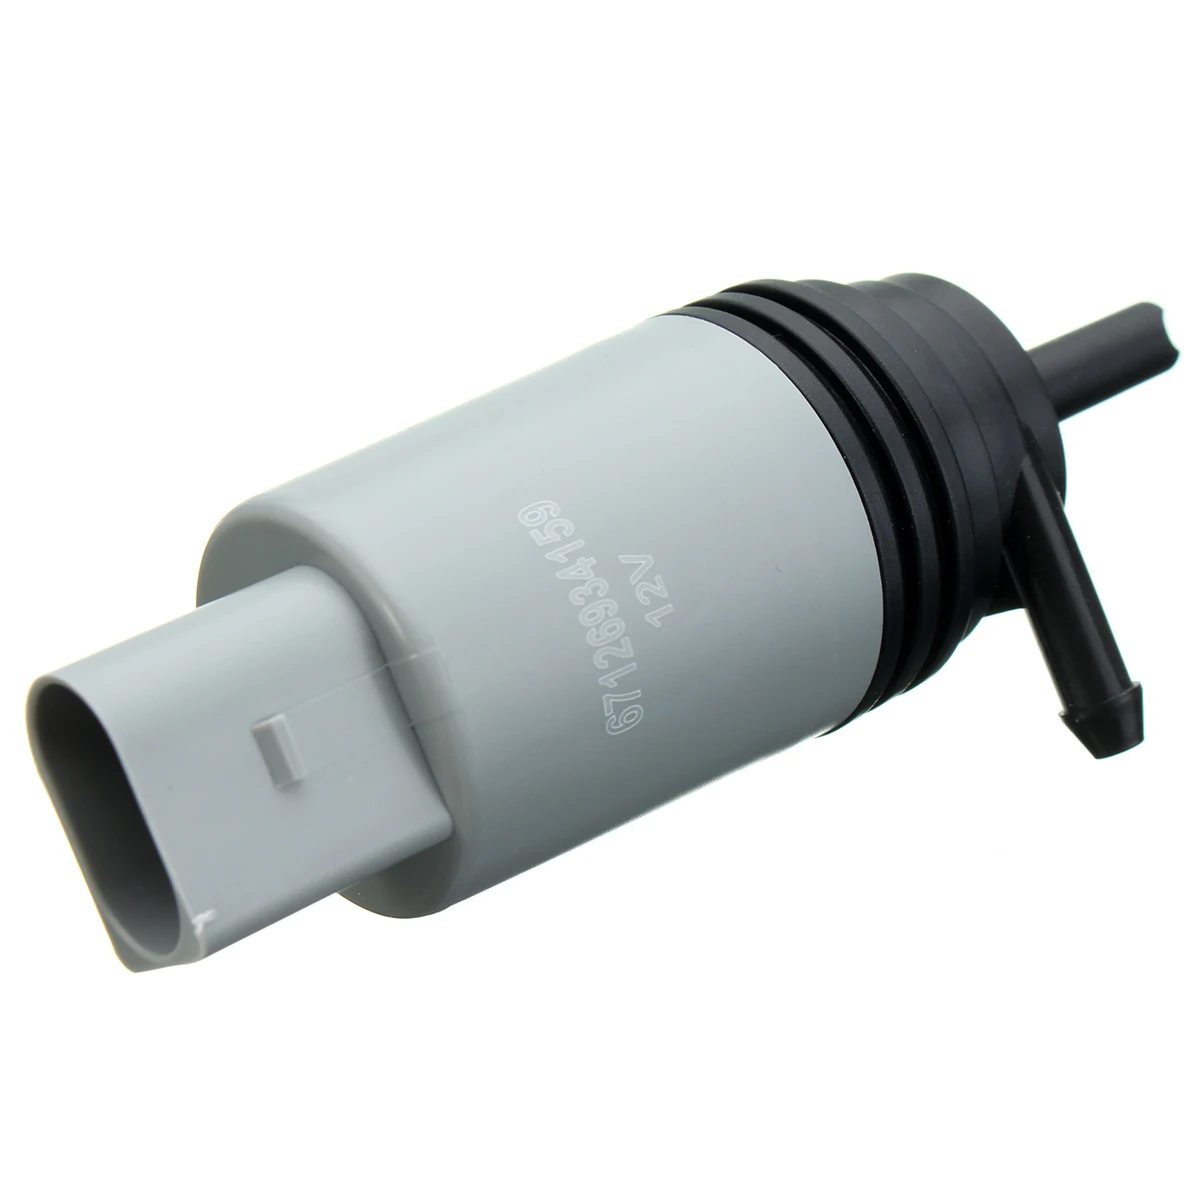 1x Windscreen Car Windshield Washer Pump For BMW E60 E61 E65 E66 E82 E90 E88 E91 E92 67126934159 Wipers Water Spray Washing Pump